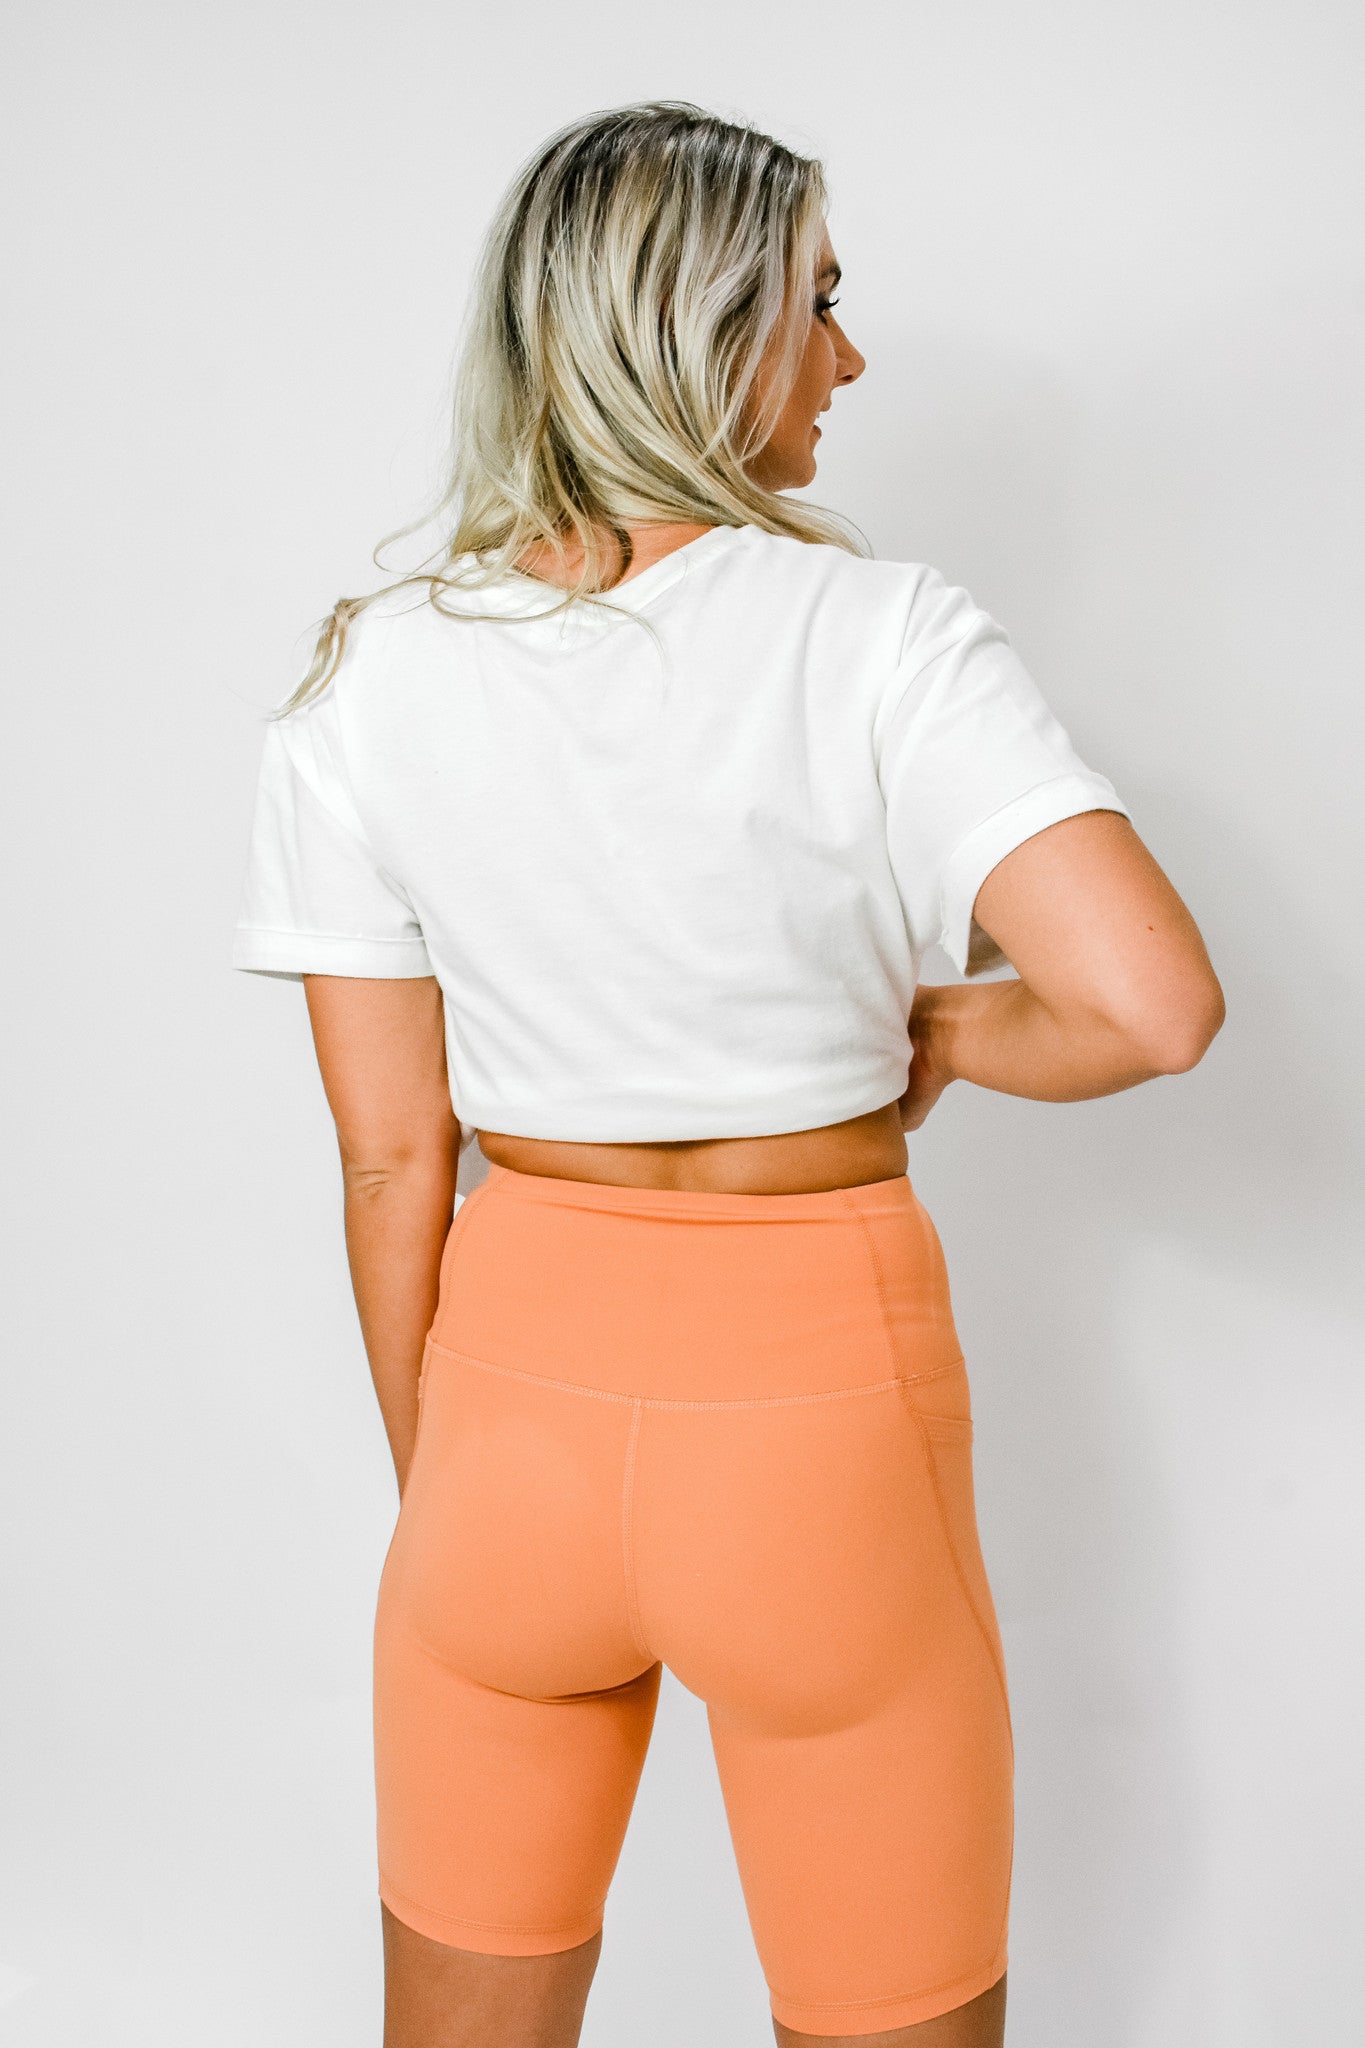 Track Star Biker Shorts - Orange